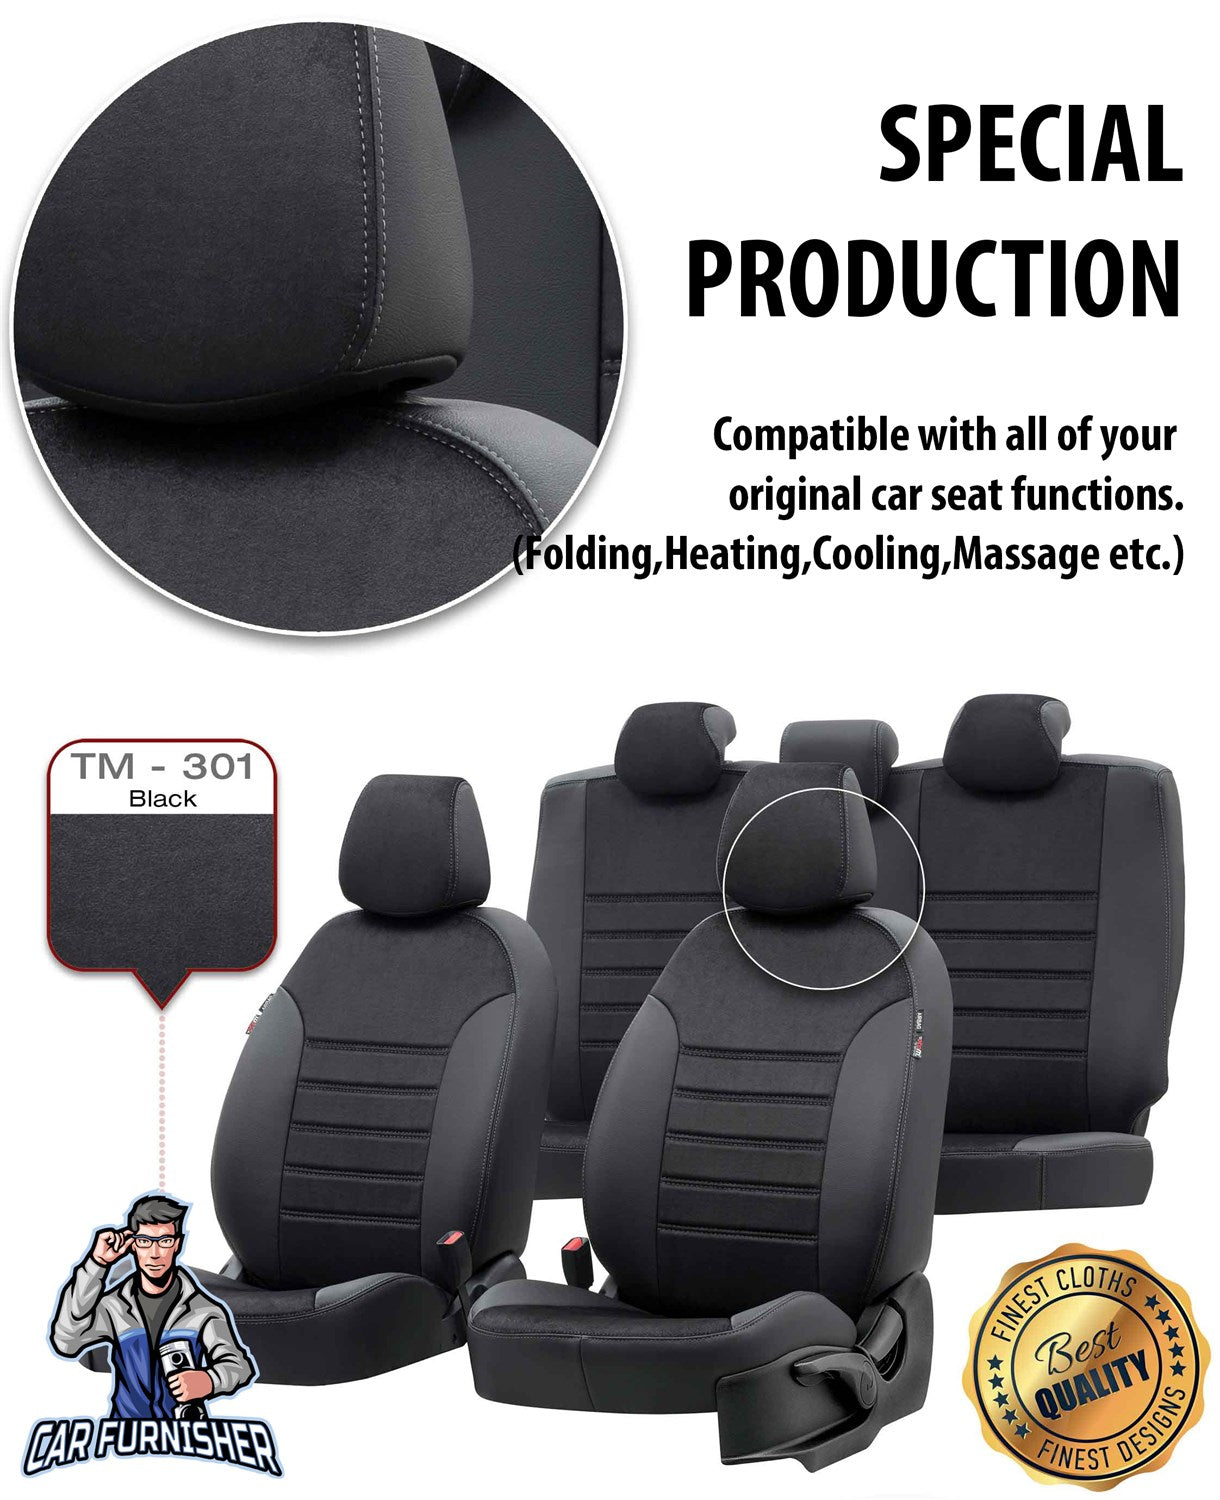 Seat Altea Seat Covers Milano Suede Design Black Leather & Suede Fabric